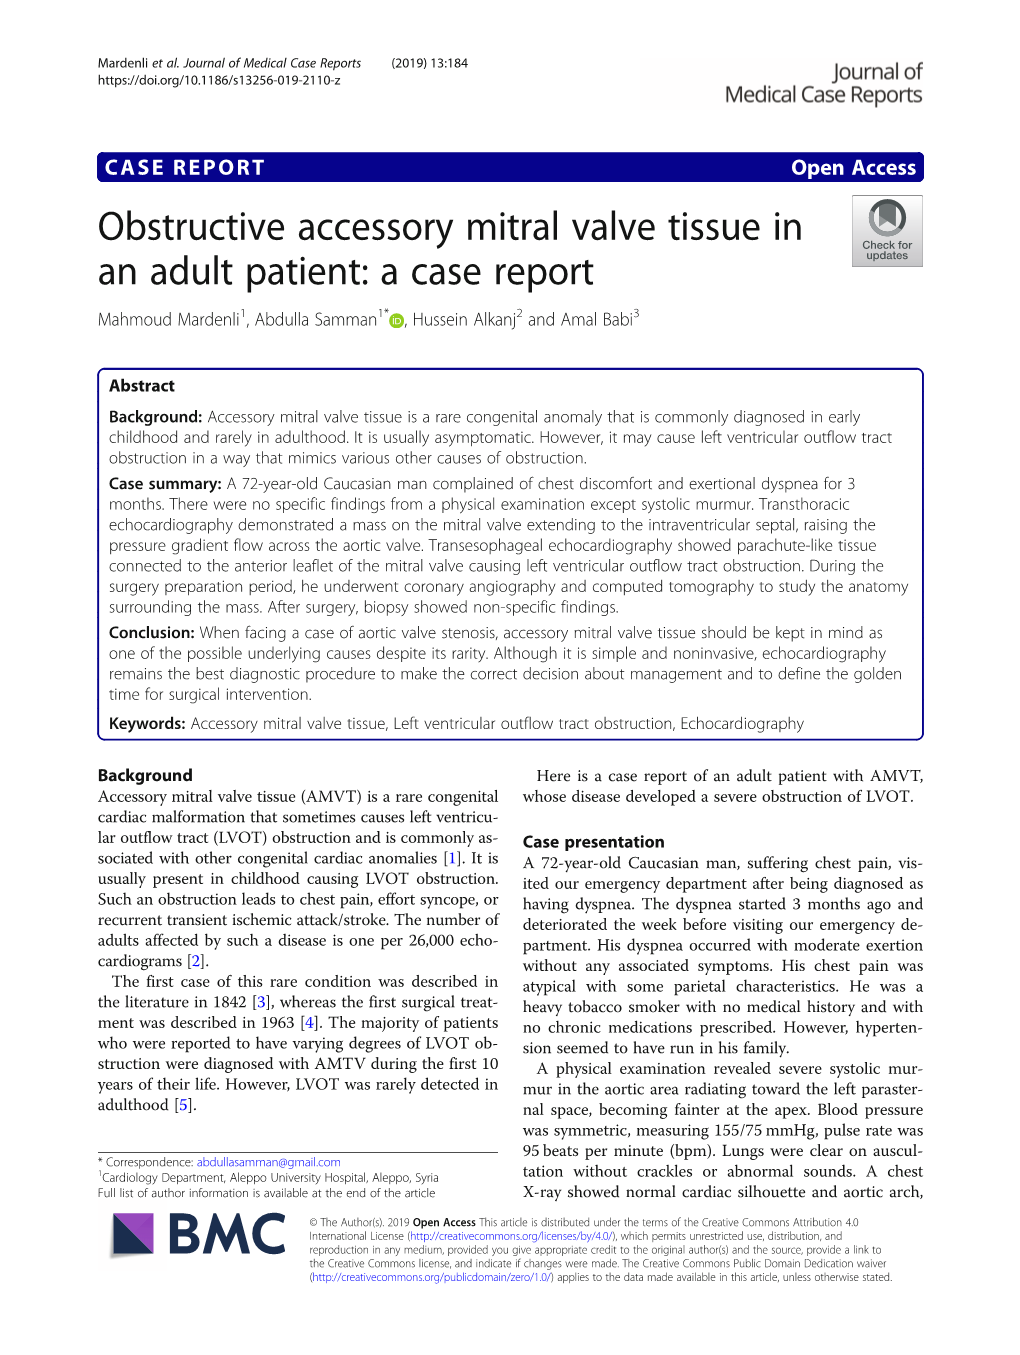 Obstructive Accessory Mitral Valve Tissue in an Adult Patient: a Case Report Mahmoud Mardenli1, Abdulla Samman1* , Hussein Alkanj2 and Amal Babi3